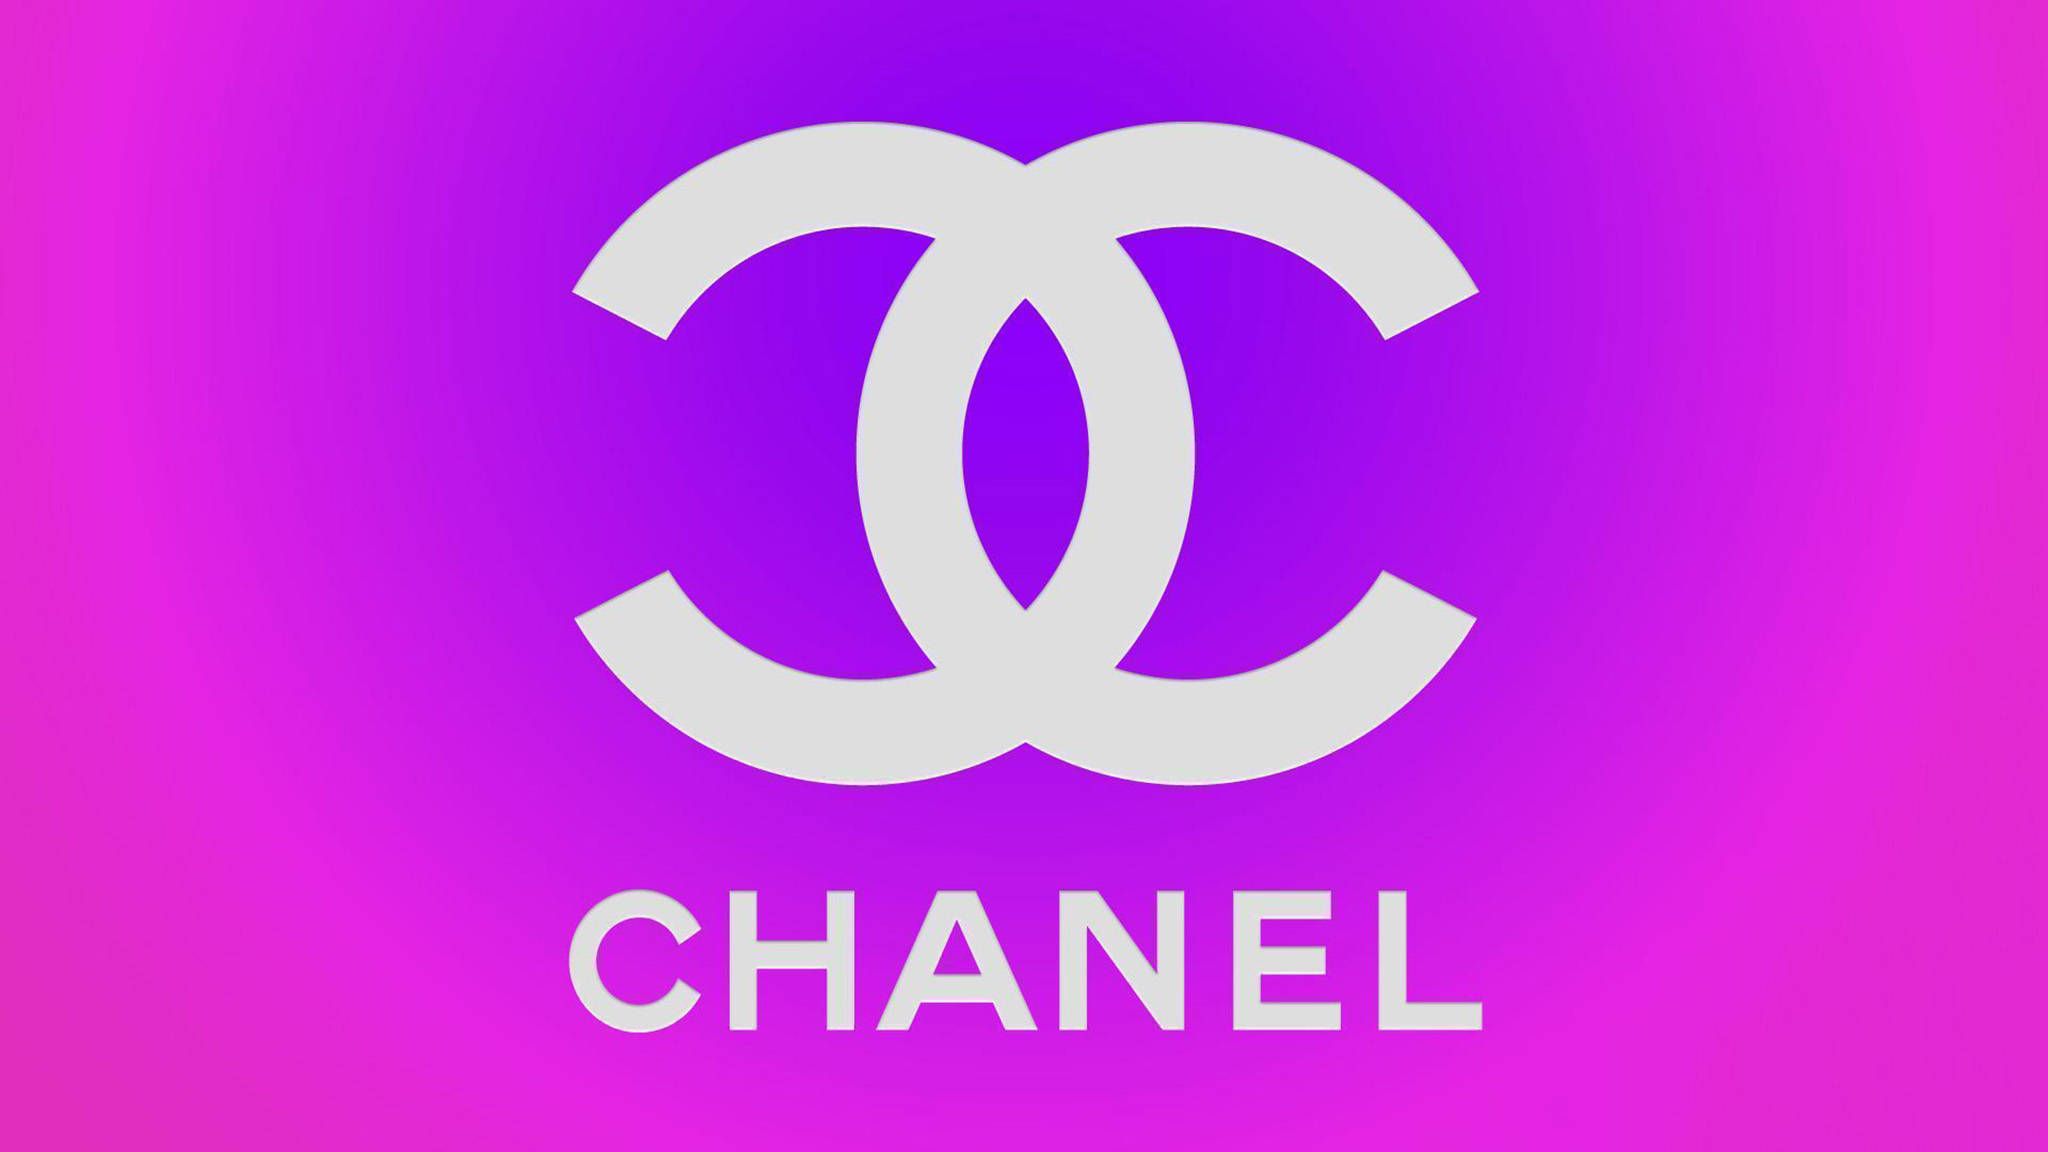 Free Chanel Logo Wallpaper Downloads, Chanel Logo Wallpaper for FREE